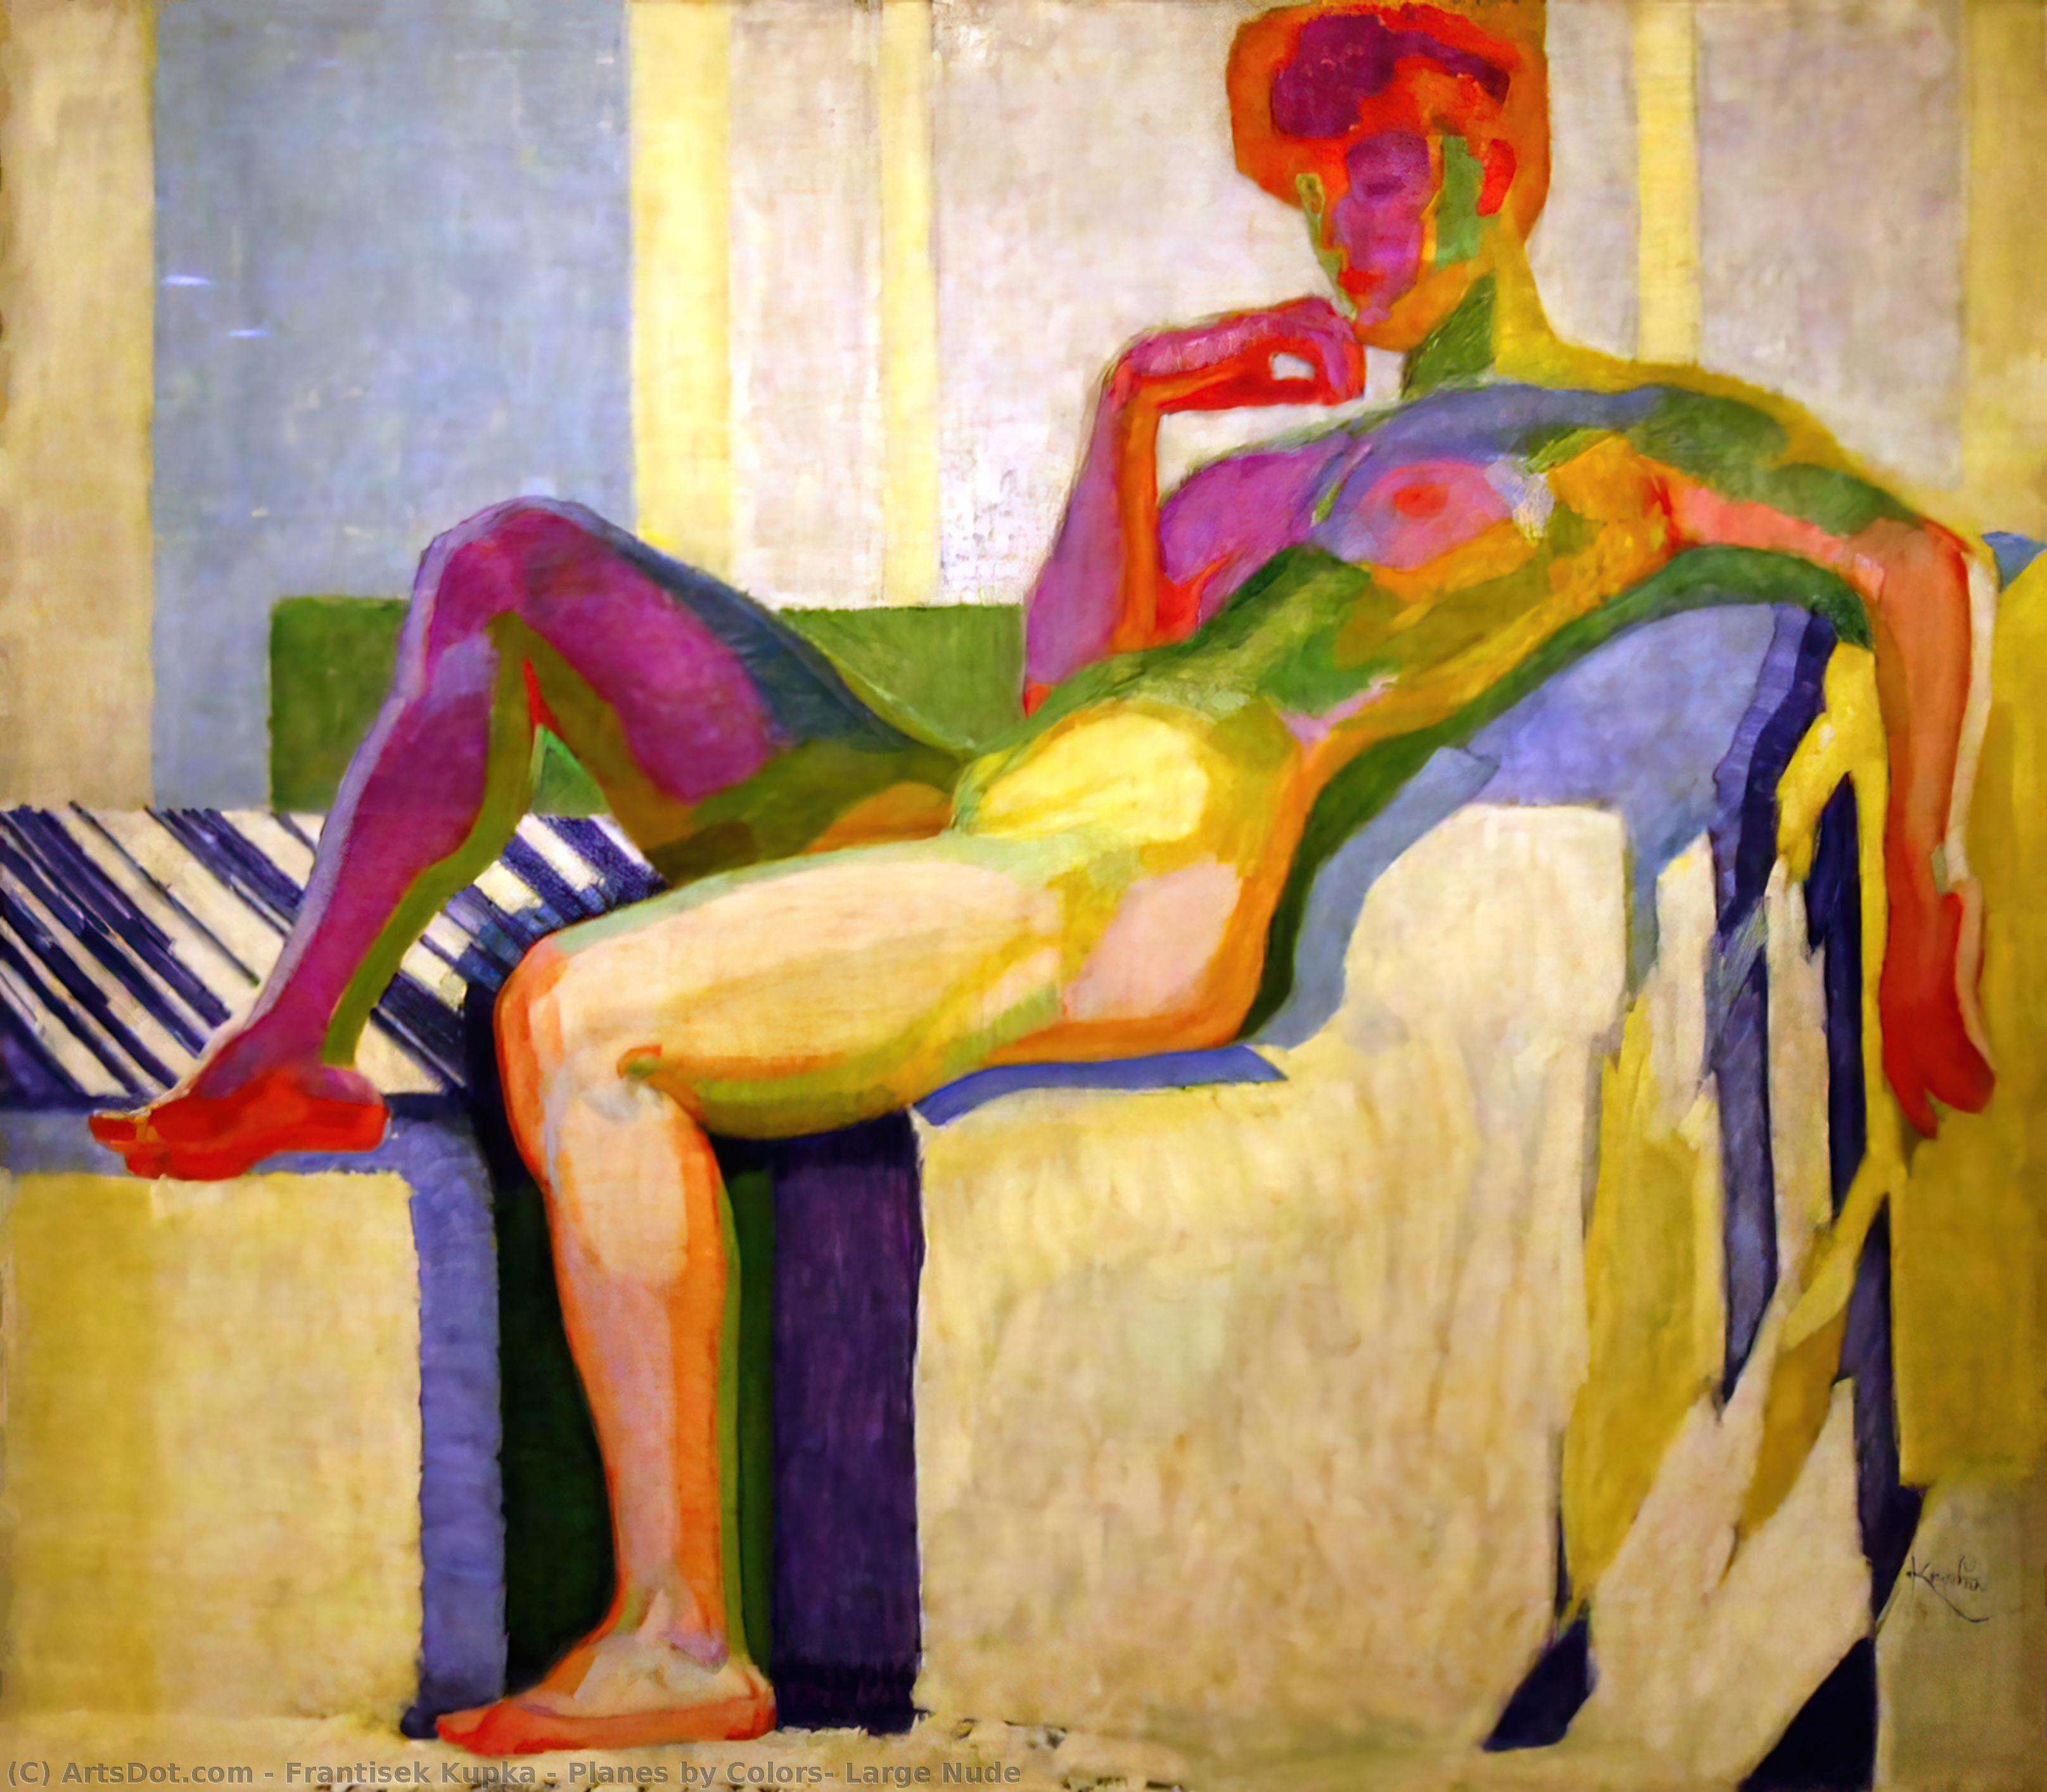 WikiOO.org - Εγκυκλοπαίδεια Καλών Τεχνών - Ζωγραφική, έργα τέχνης Frantisek Kupka - Planes by Colors, Large Nude